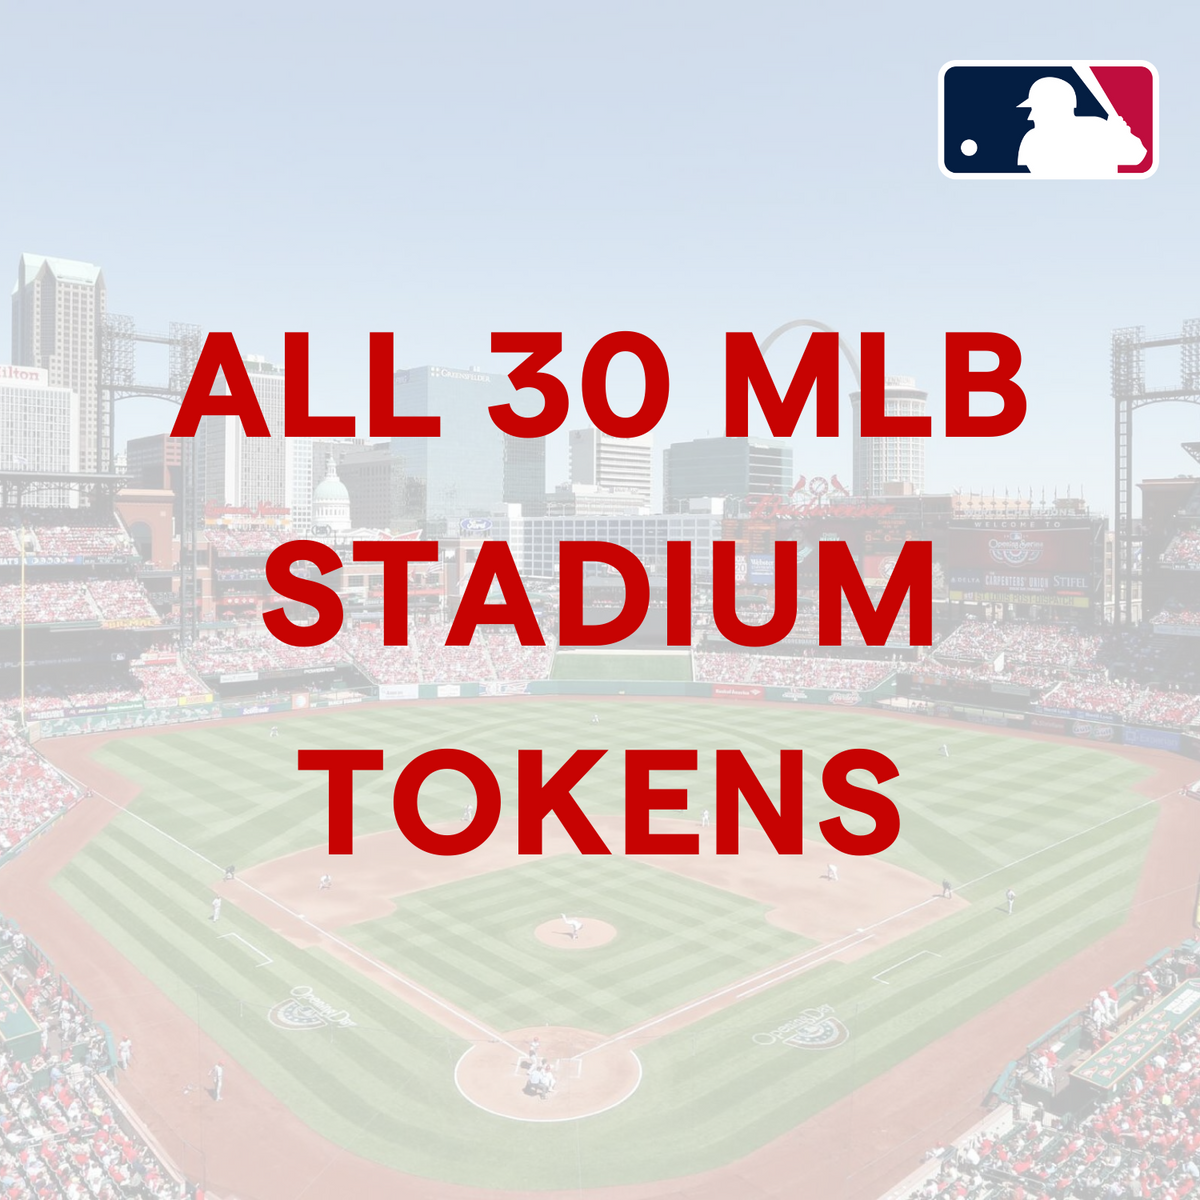 All 30 MLB Stadium Tokens